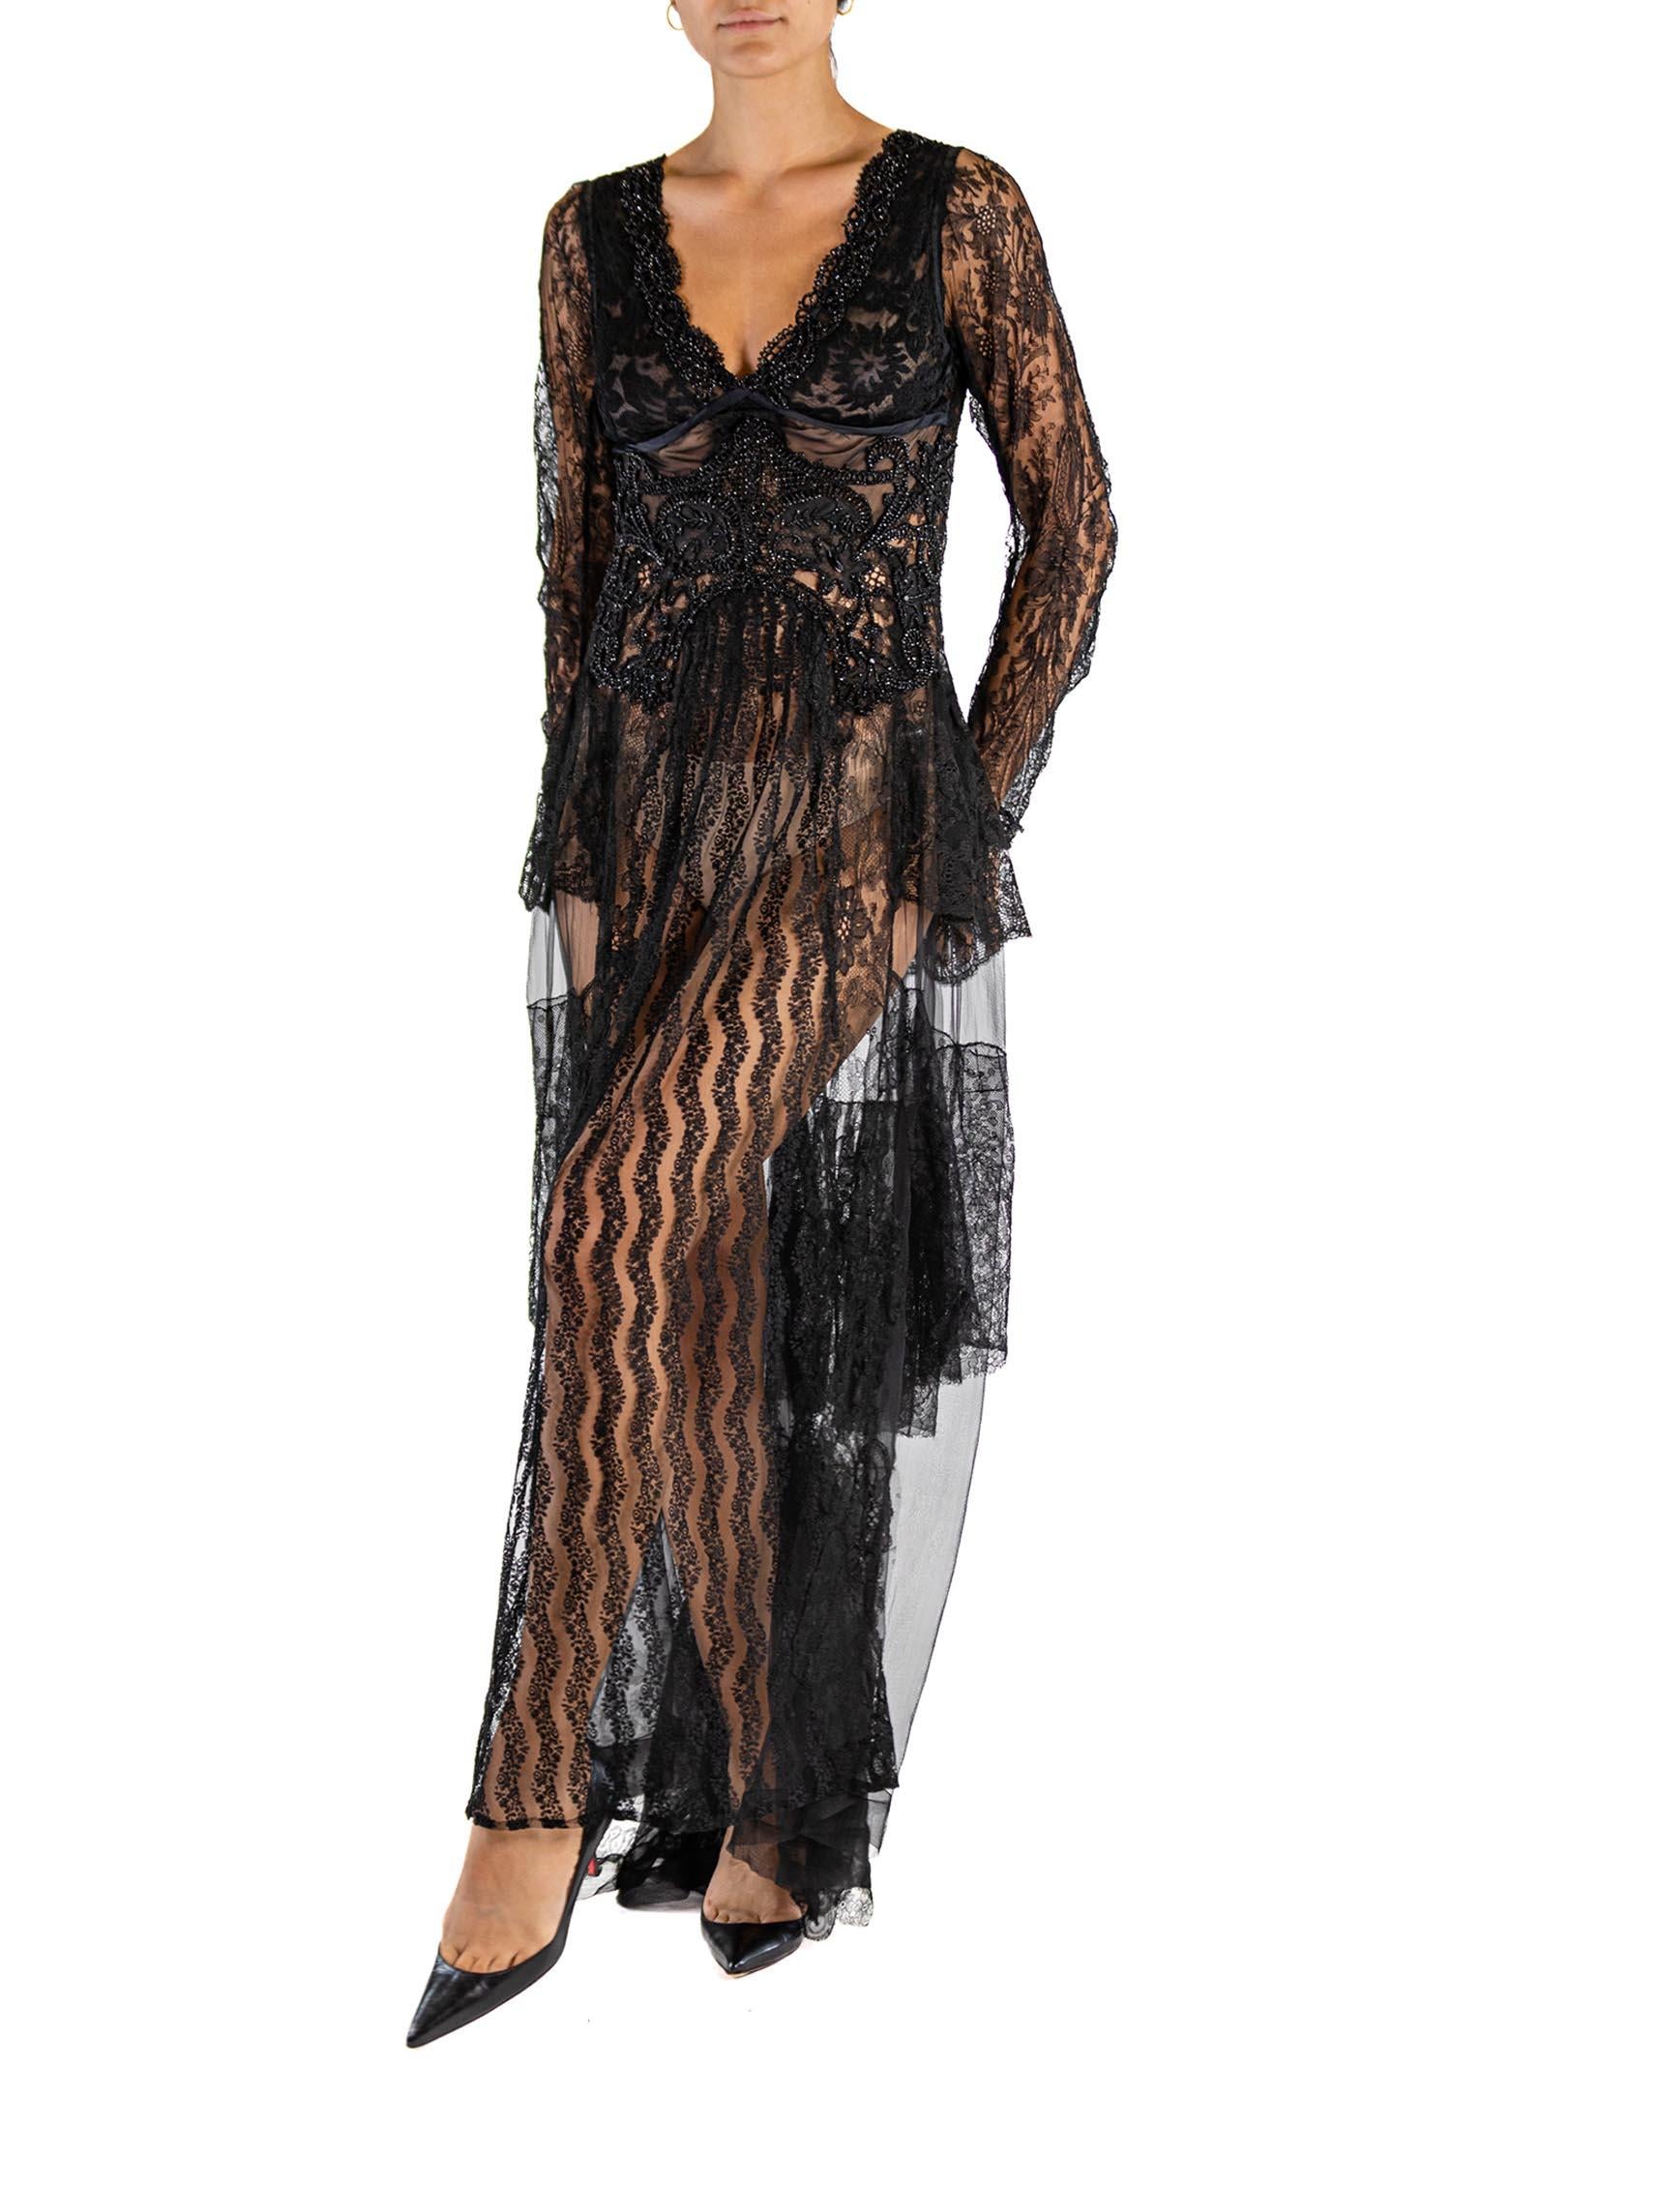 MORPHEW ATELIER Black Antique Lace Victorian Beadwork Gown For Sale 2